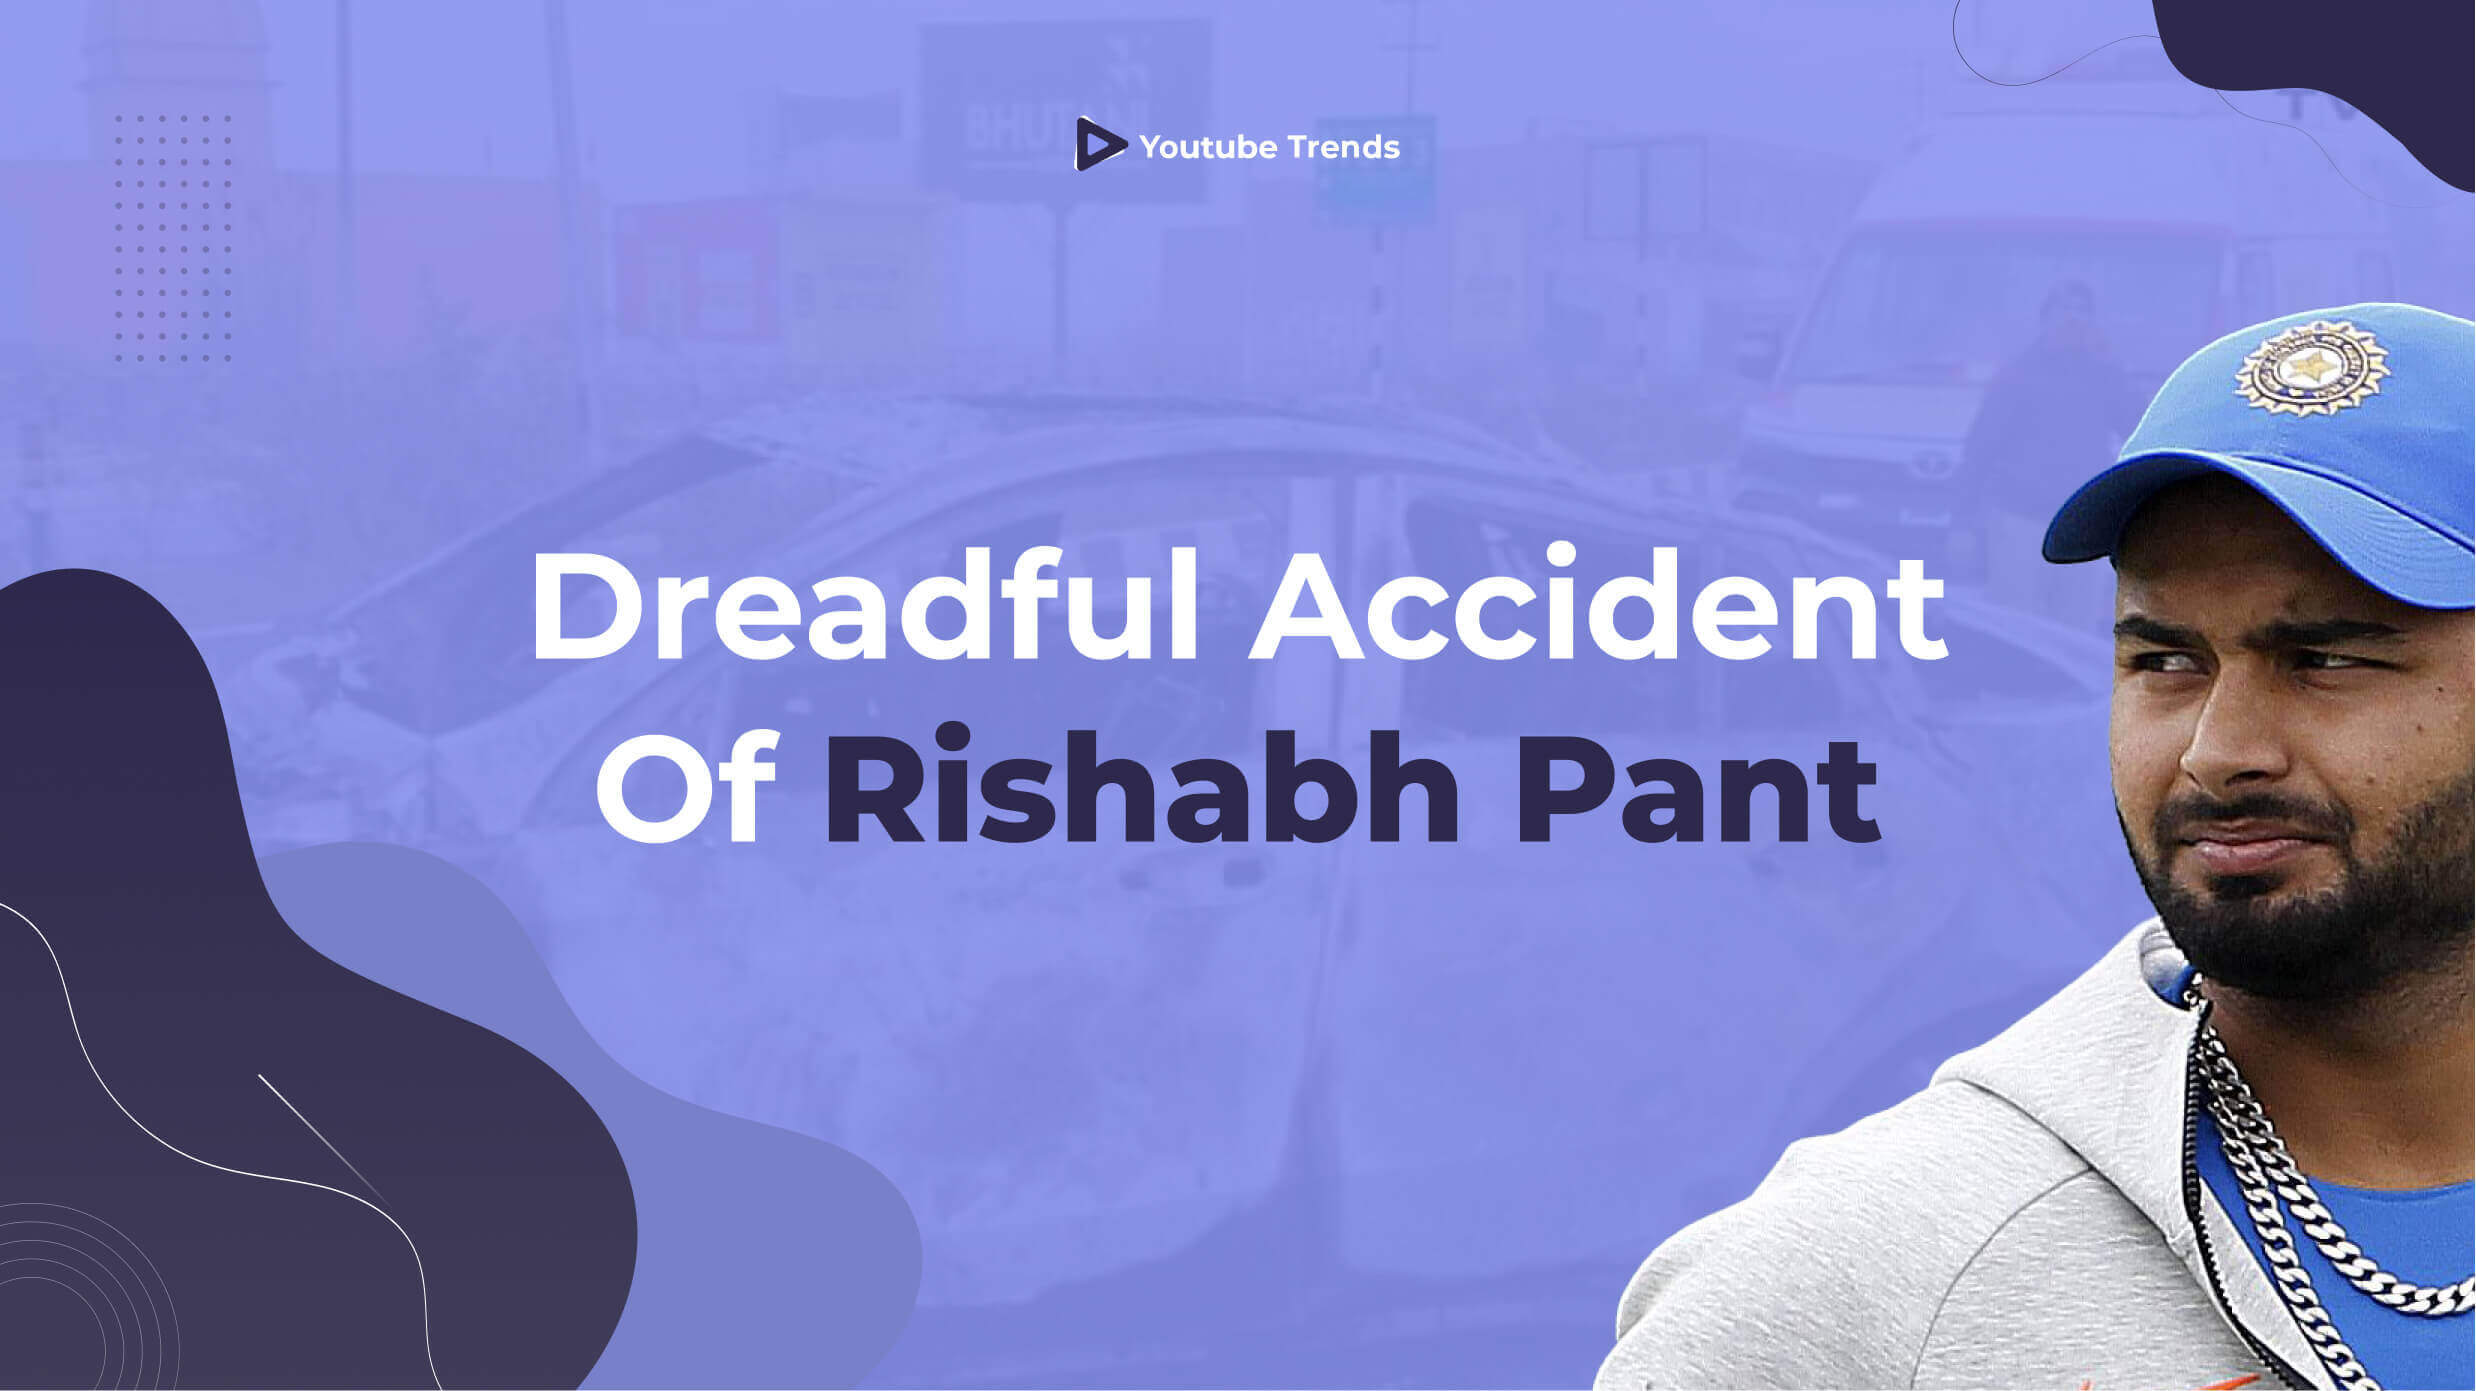 Dreadful Accident of Rishabh pant